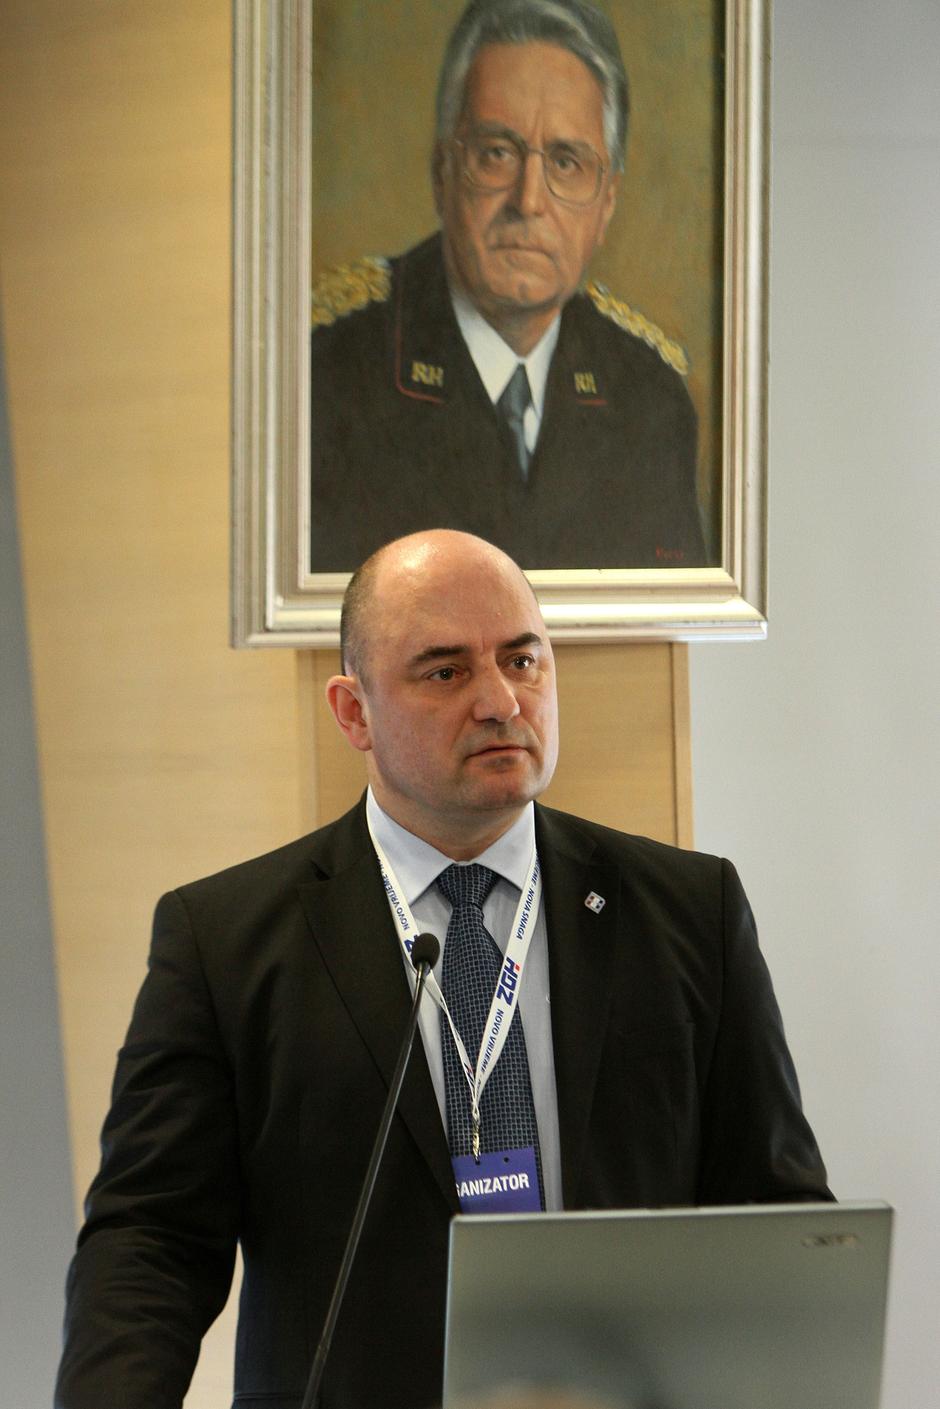 Milijan Brkić | Author: Marko Mrkonjić (PIXSELL)